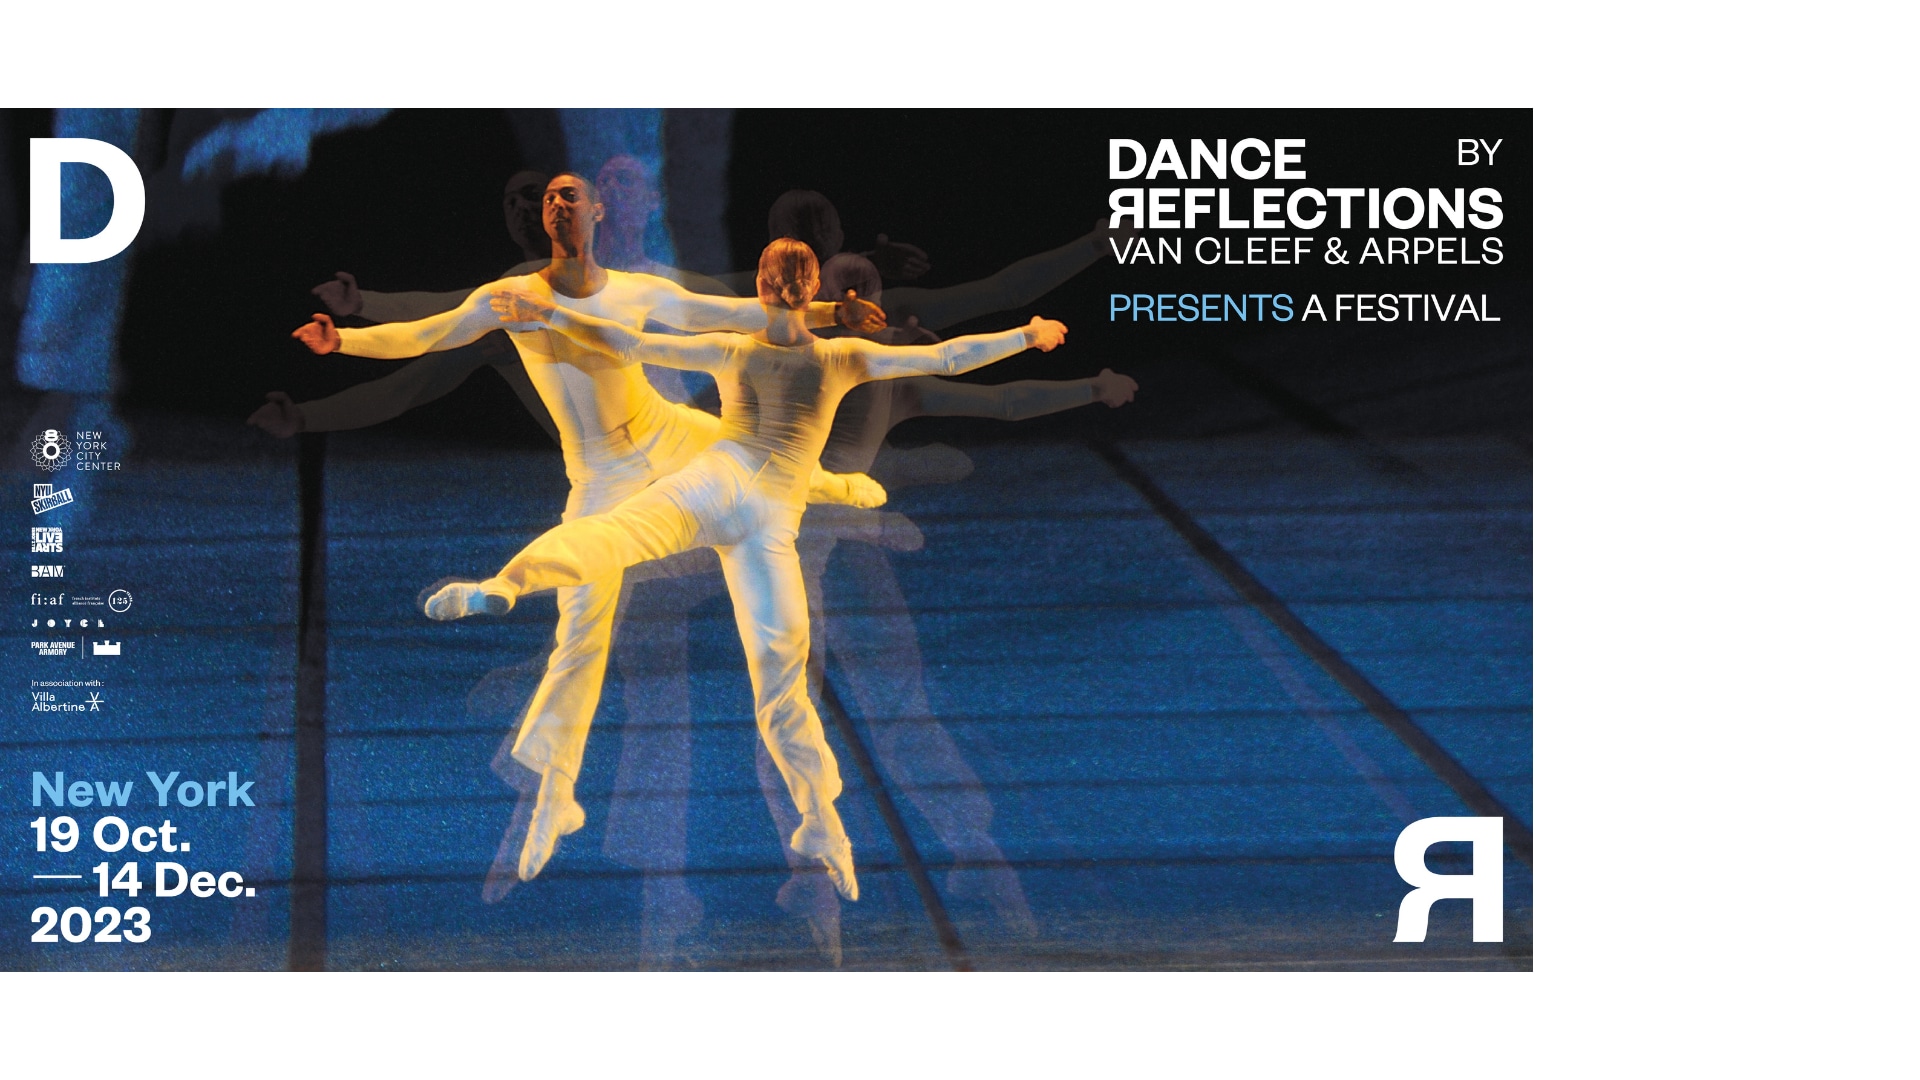 Affiche du festival Dance Reflections by Van Cleef & Arpels à NY